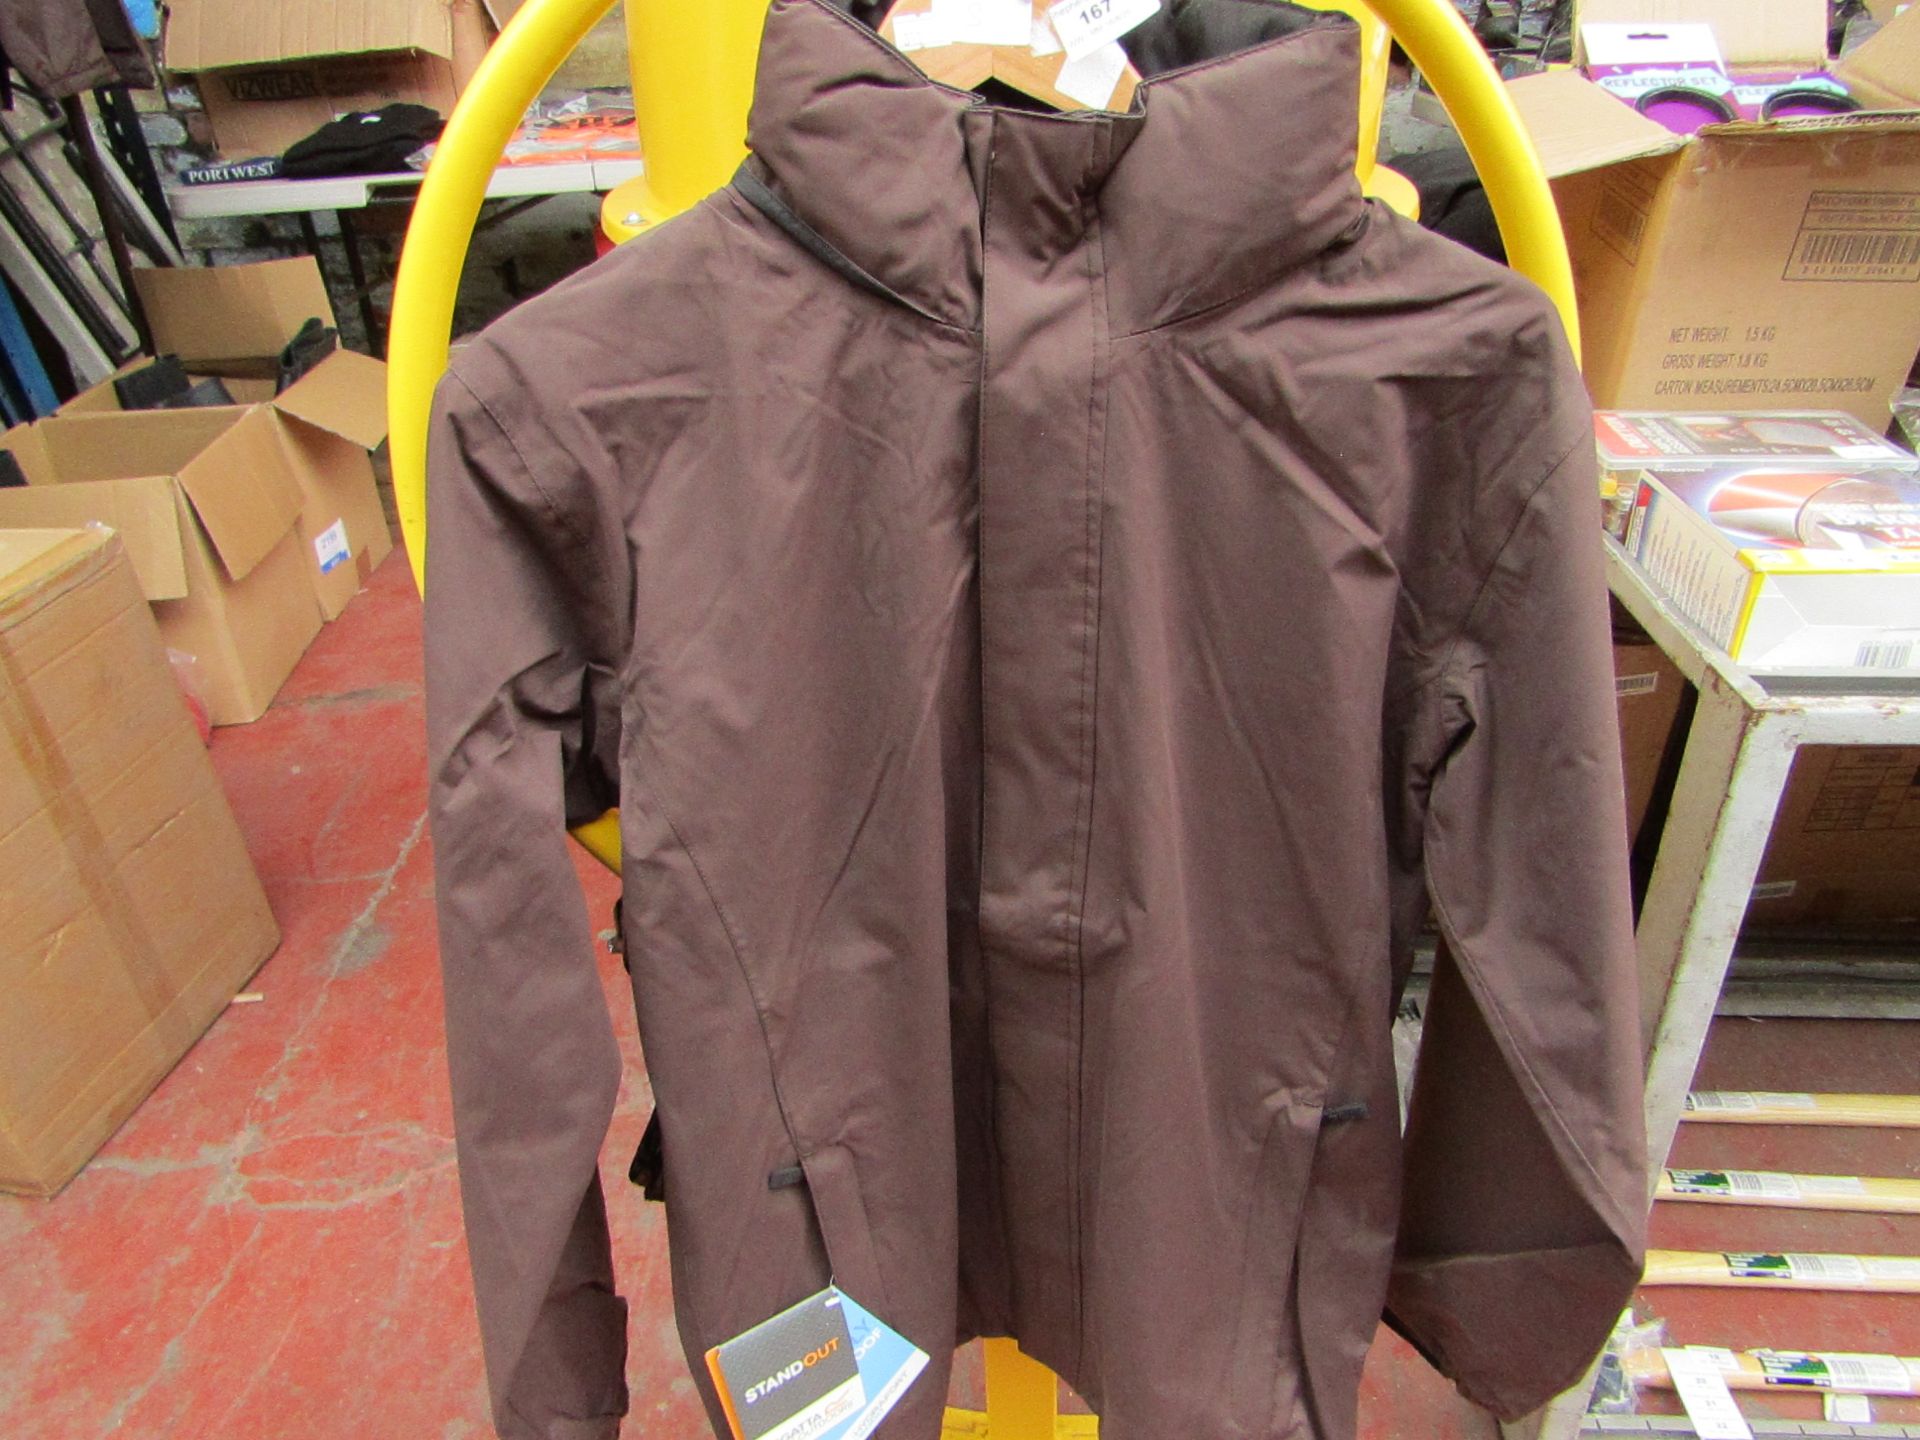 Regatta - Wind- Proof & water-proof Jacket - Size Small - New.